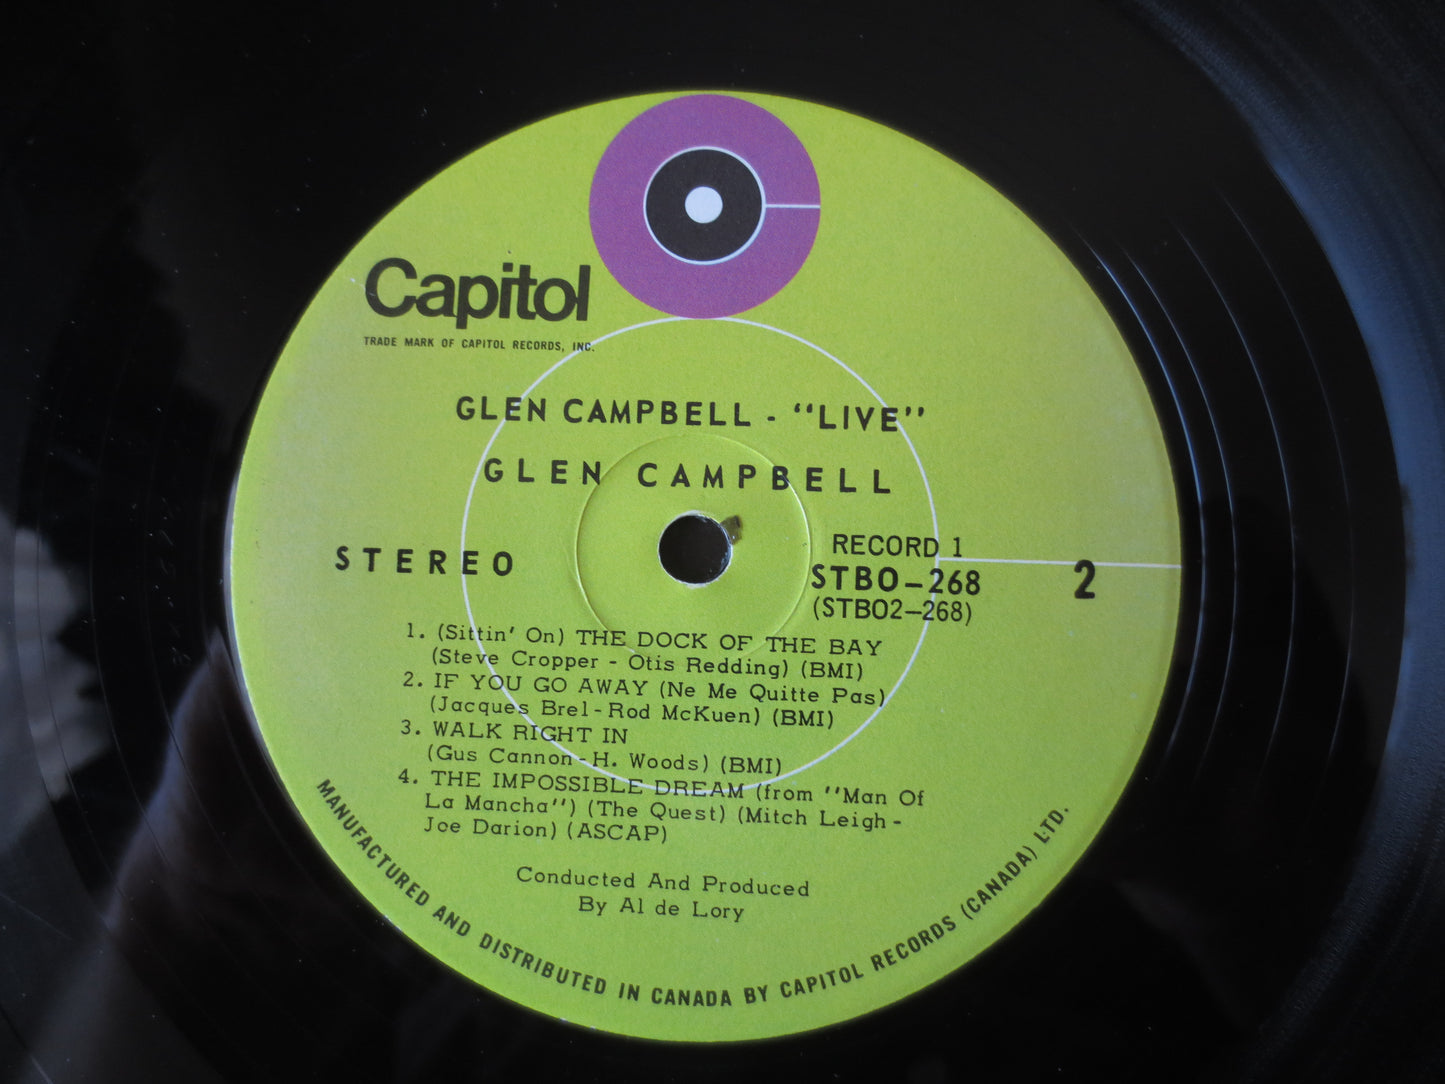 GLEN CAMPBELL, LIVE Double Album, Glen Campbell Vinyl, Glen Campbell Lp, Country Record, Vintage Vinyl, 1969 Records